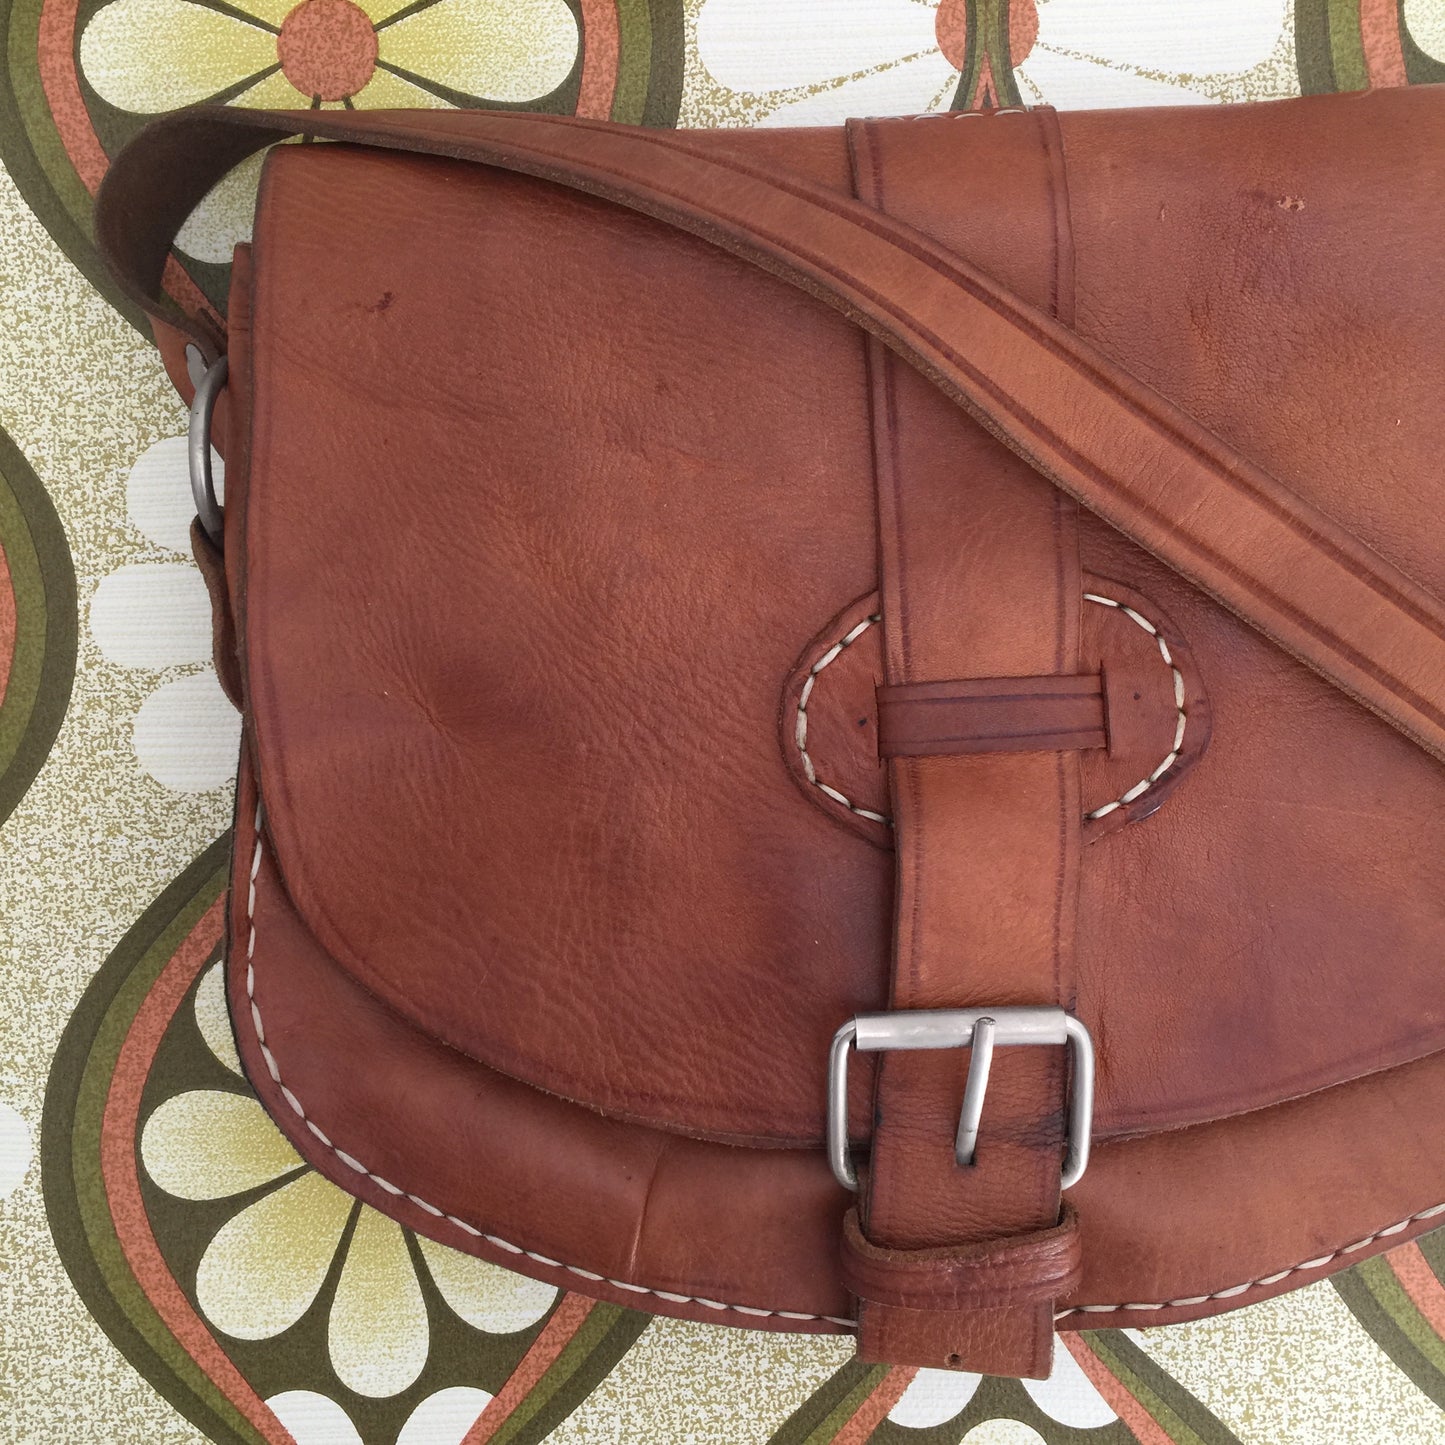 Awesome Genuine LEATHER Vintage Handbag RUSTIC Charm Boho